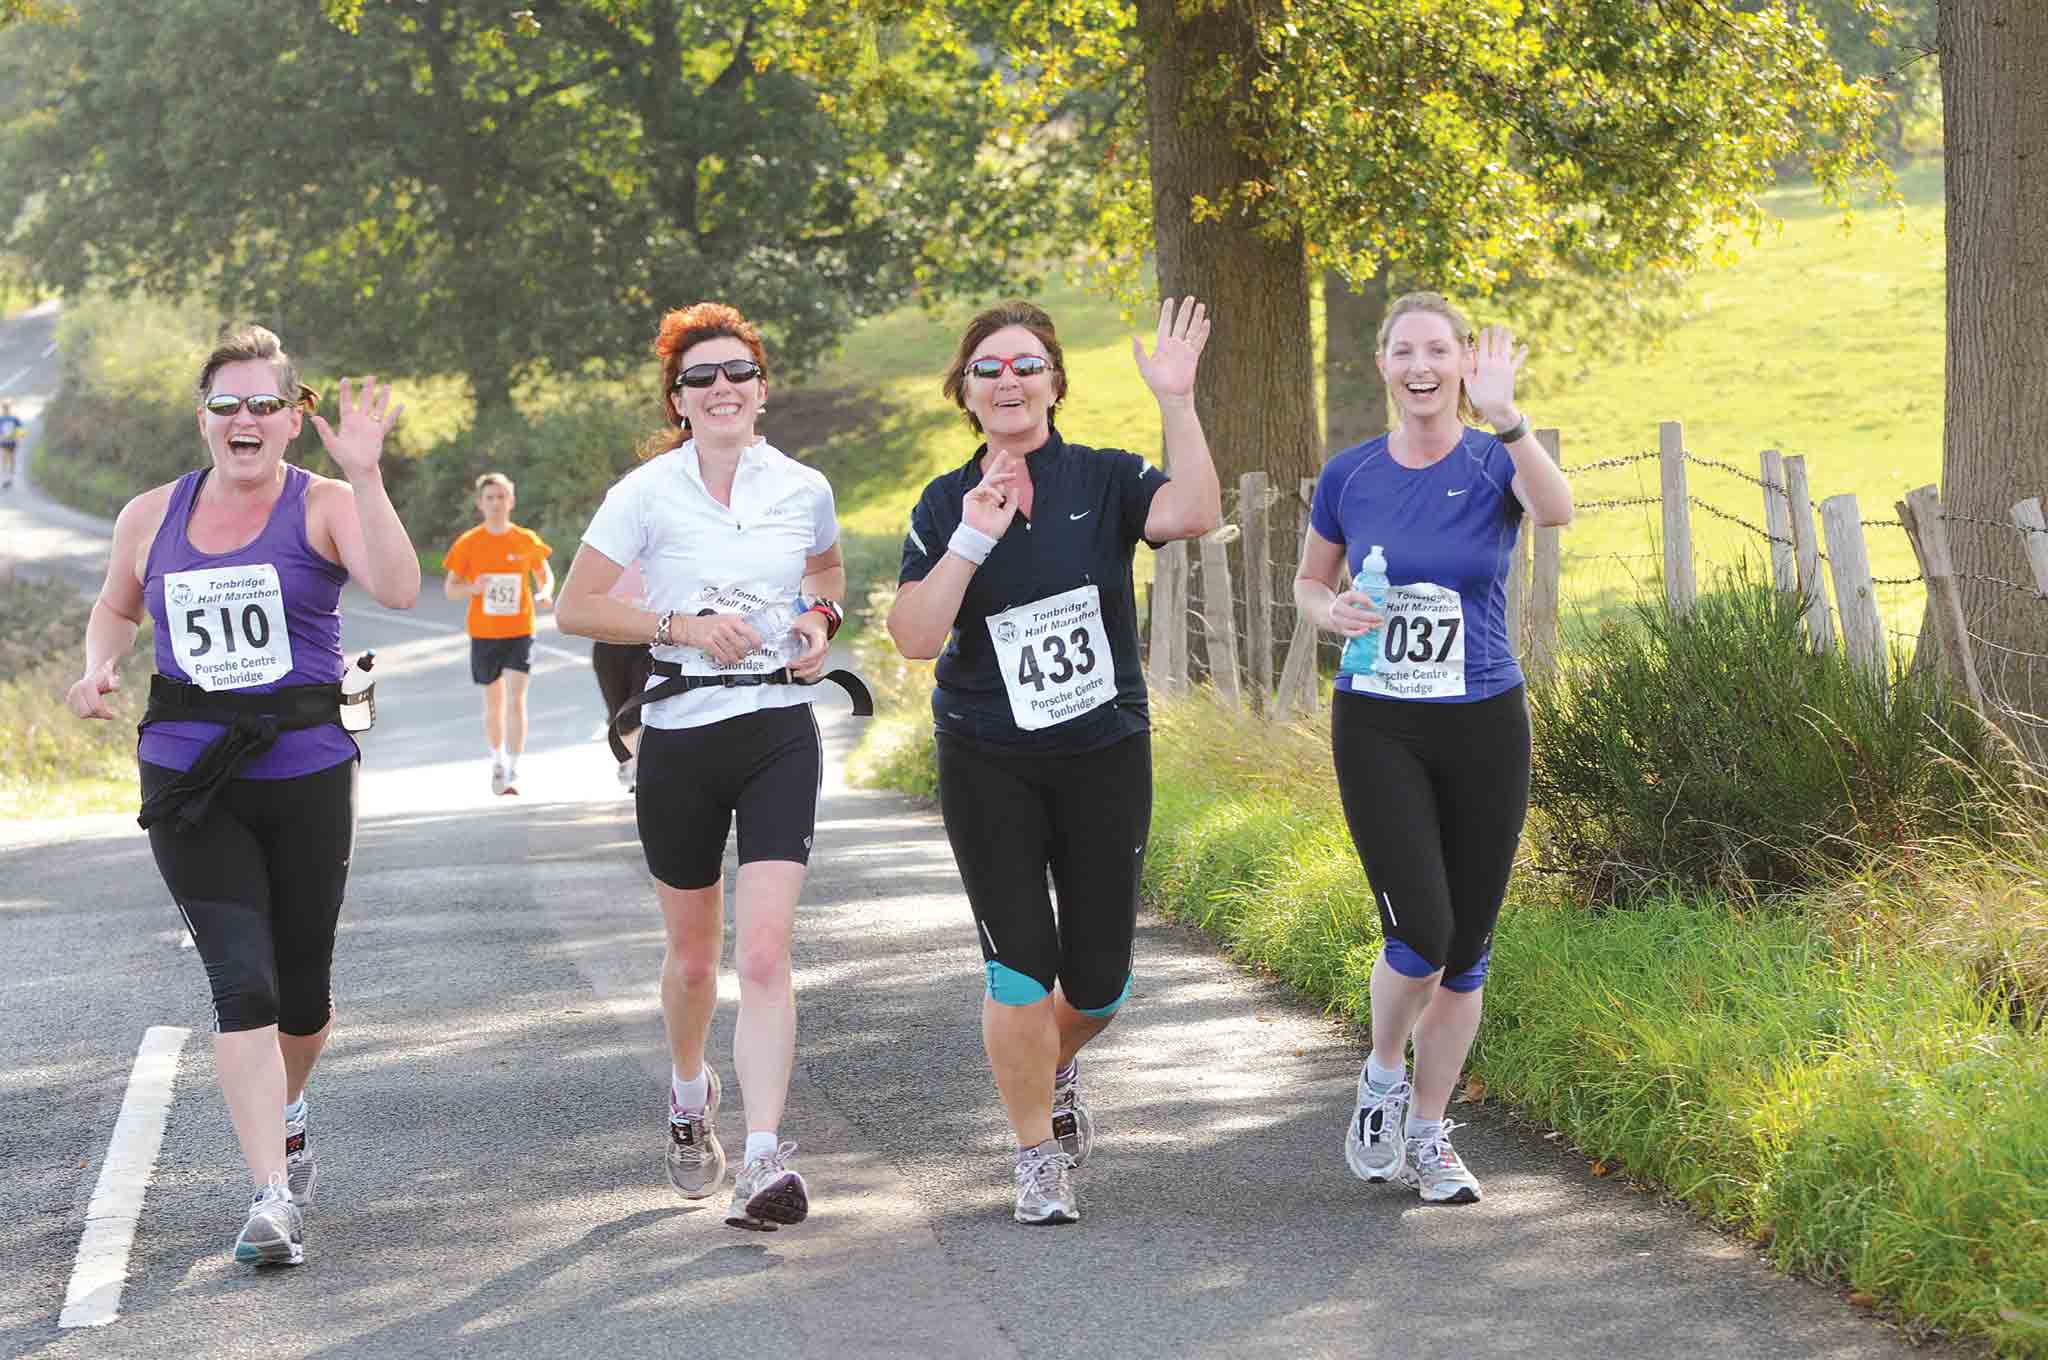 Tunbridge Wells Half Marathon: How 1,400 runners tackled 35th edition